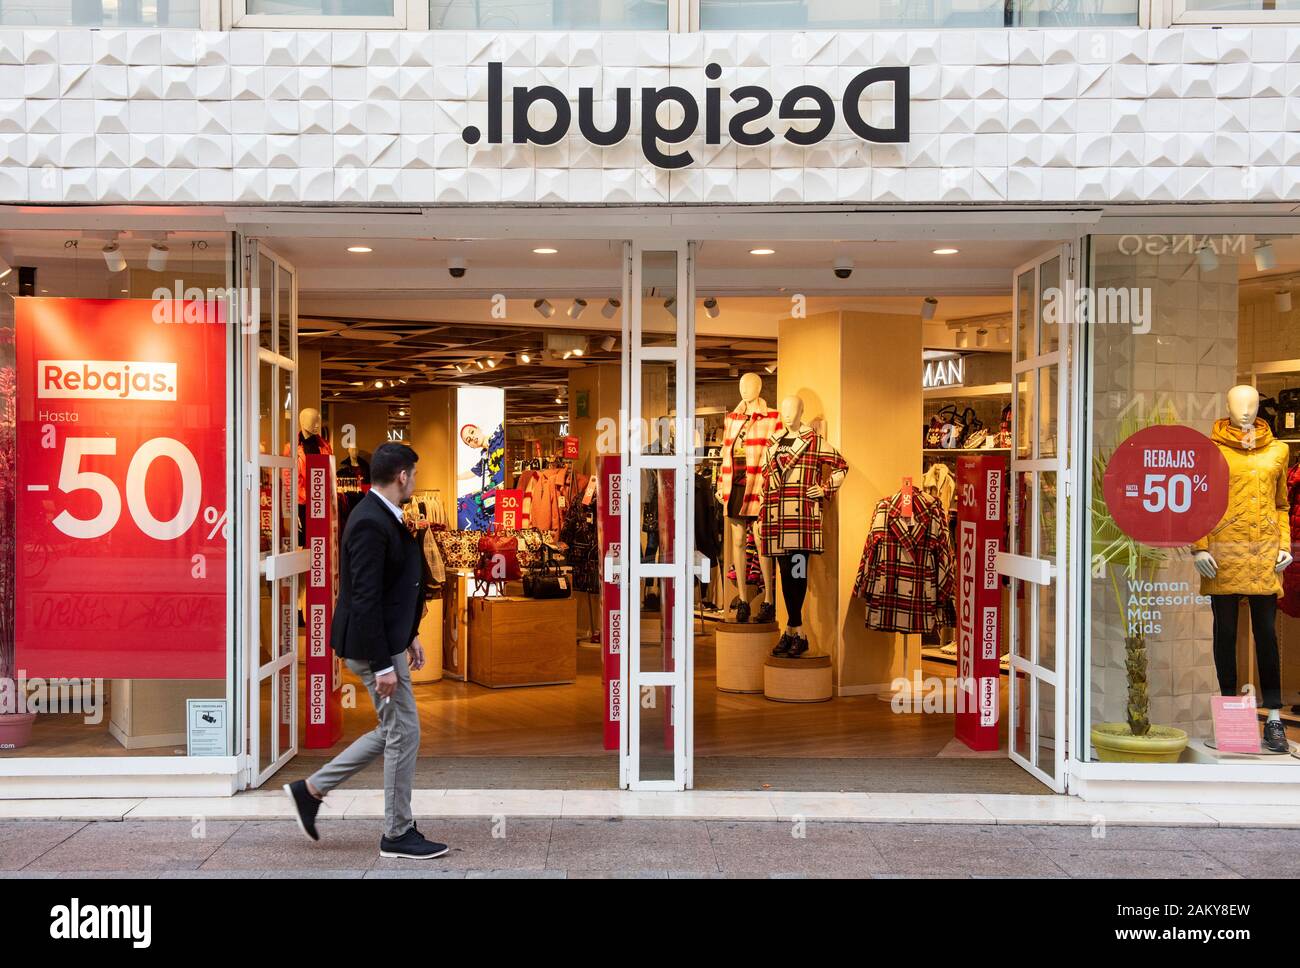 Spanish clothing brand Desigual store in Spain Photo Alamy